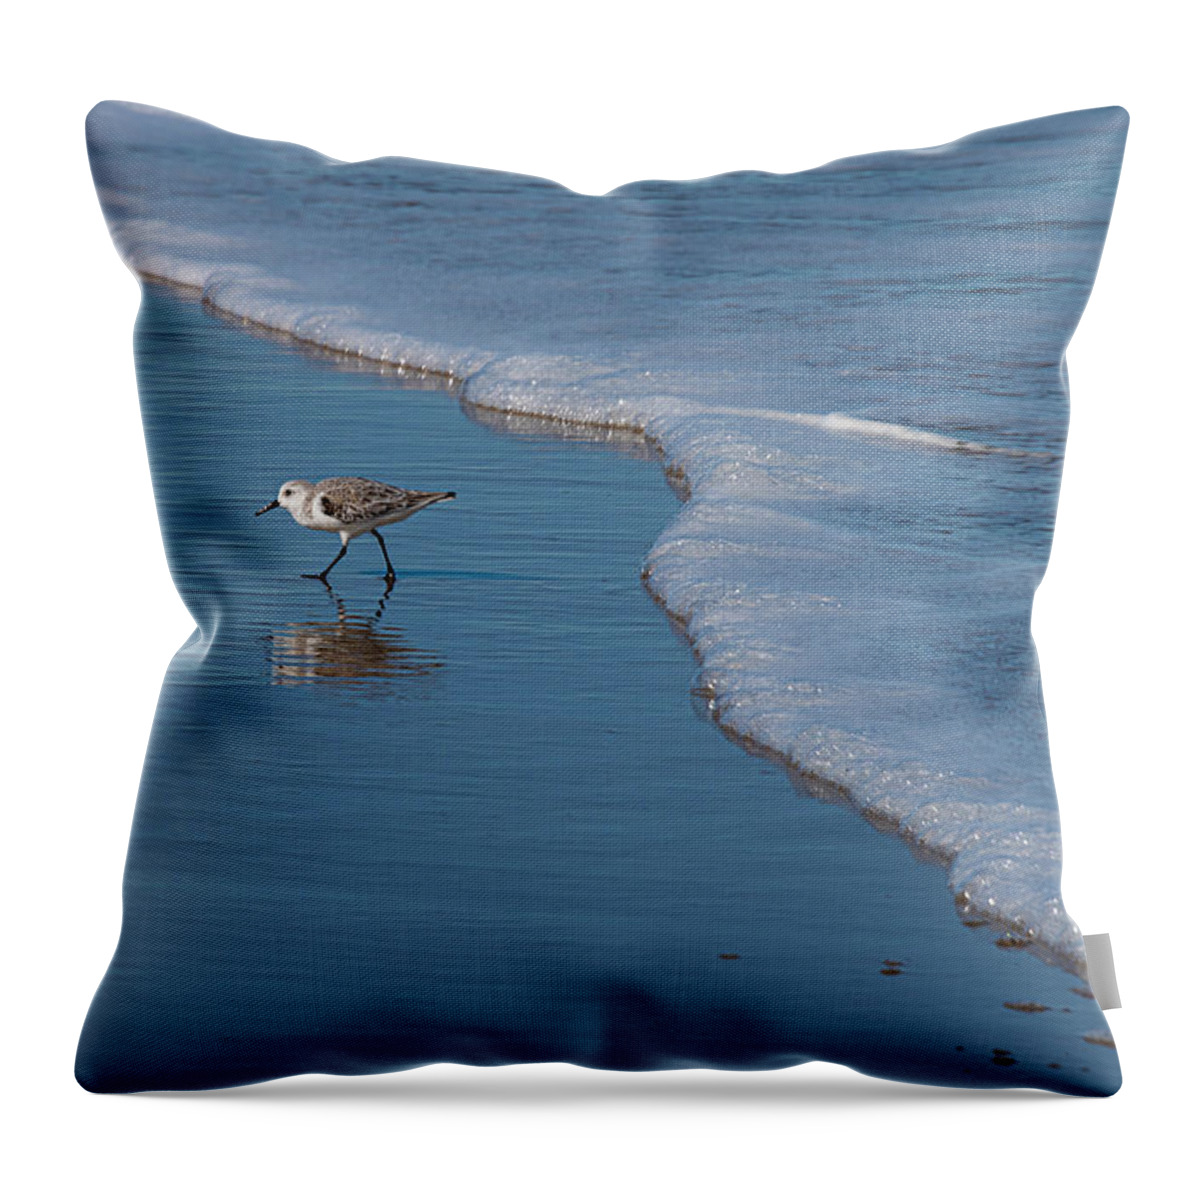 Ocean Throw Pillow featuring the photograph Shore Bird by Phil And Karen Rispin